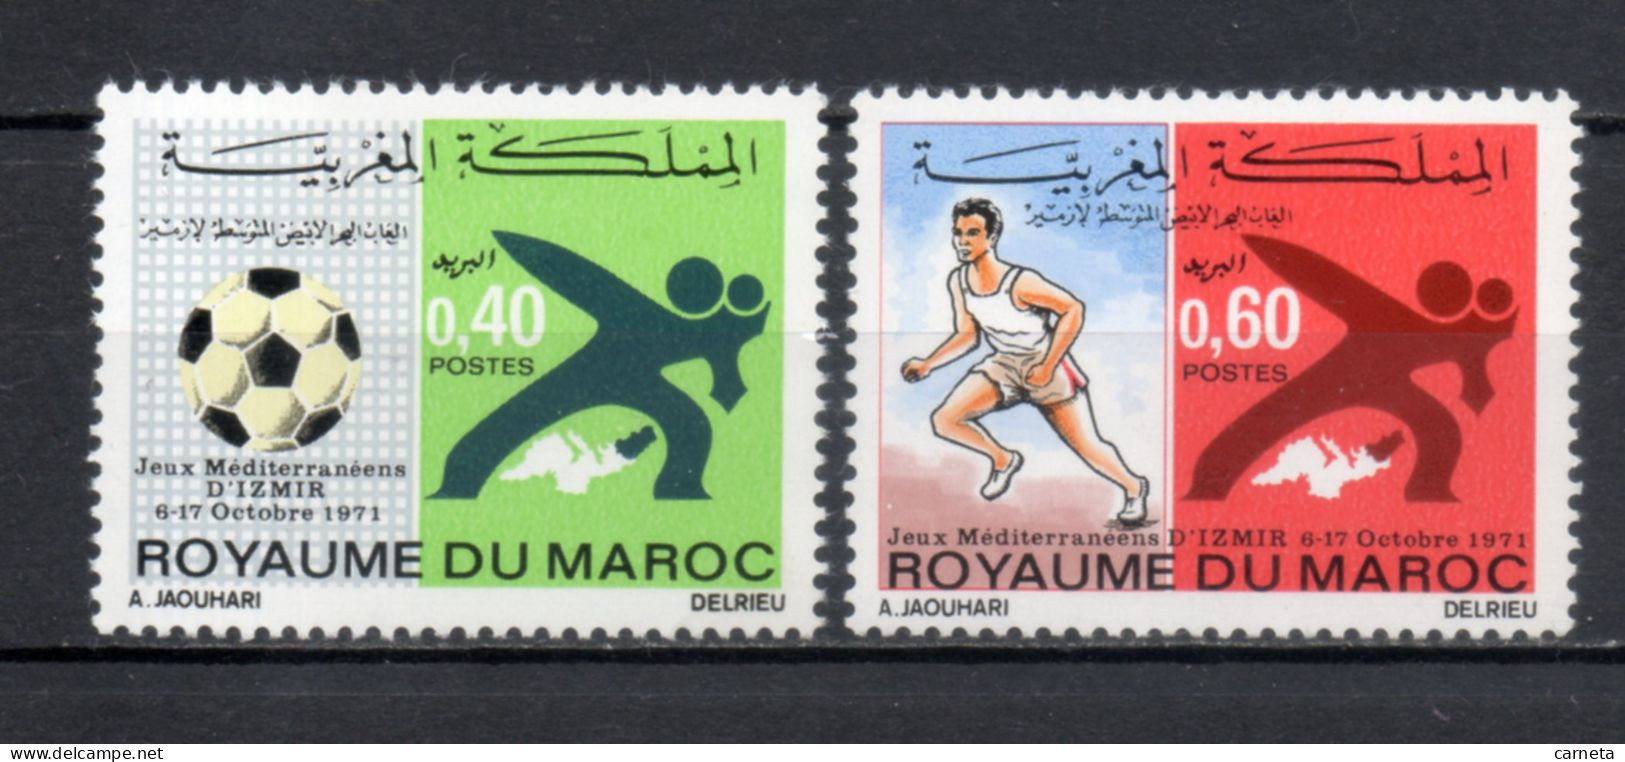 MAROC N°  625 + 626    NEUFS SANS CHARNIERE  COTE 2.00€  FOOTBALL JEUX SPORT - Marruecos (1956-...)